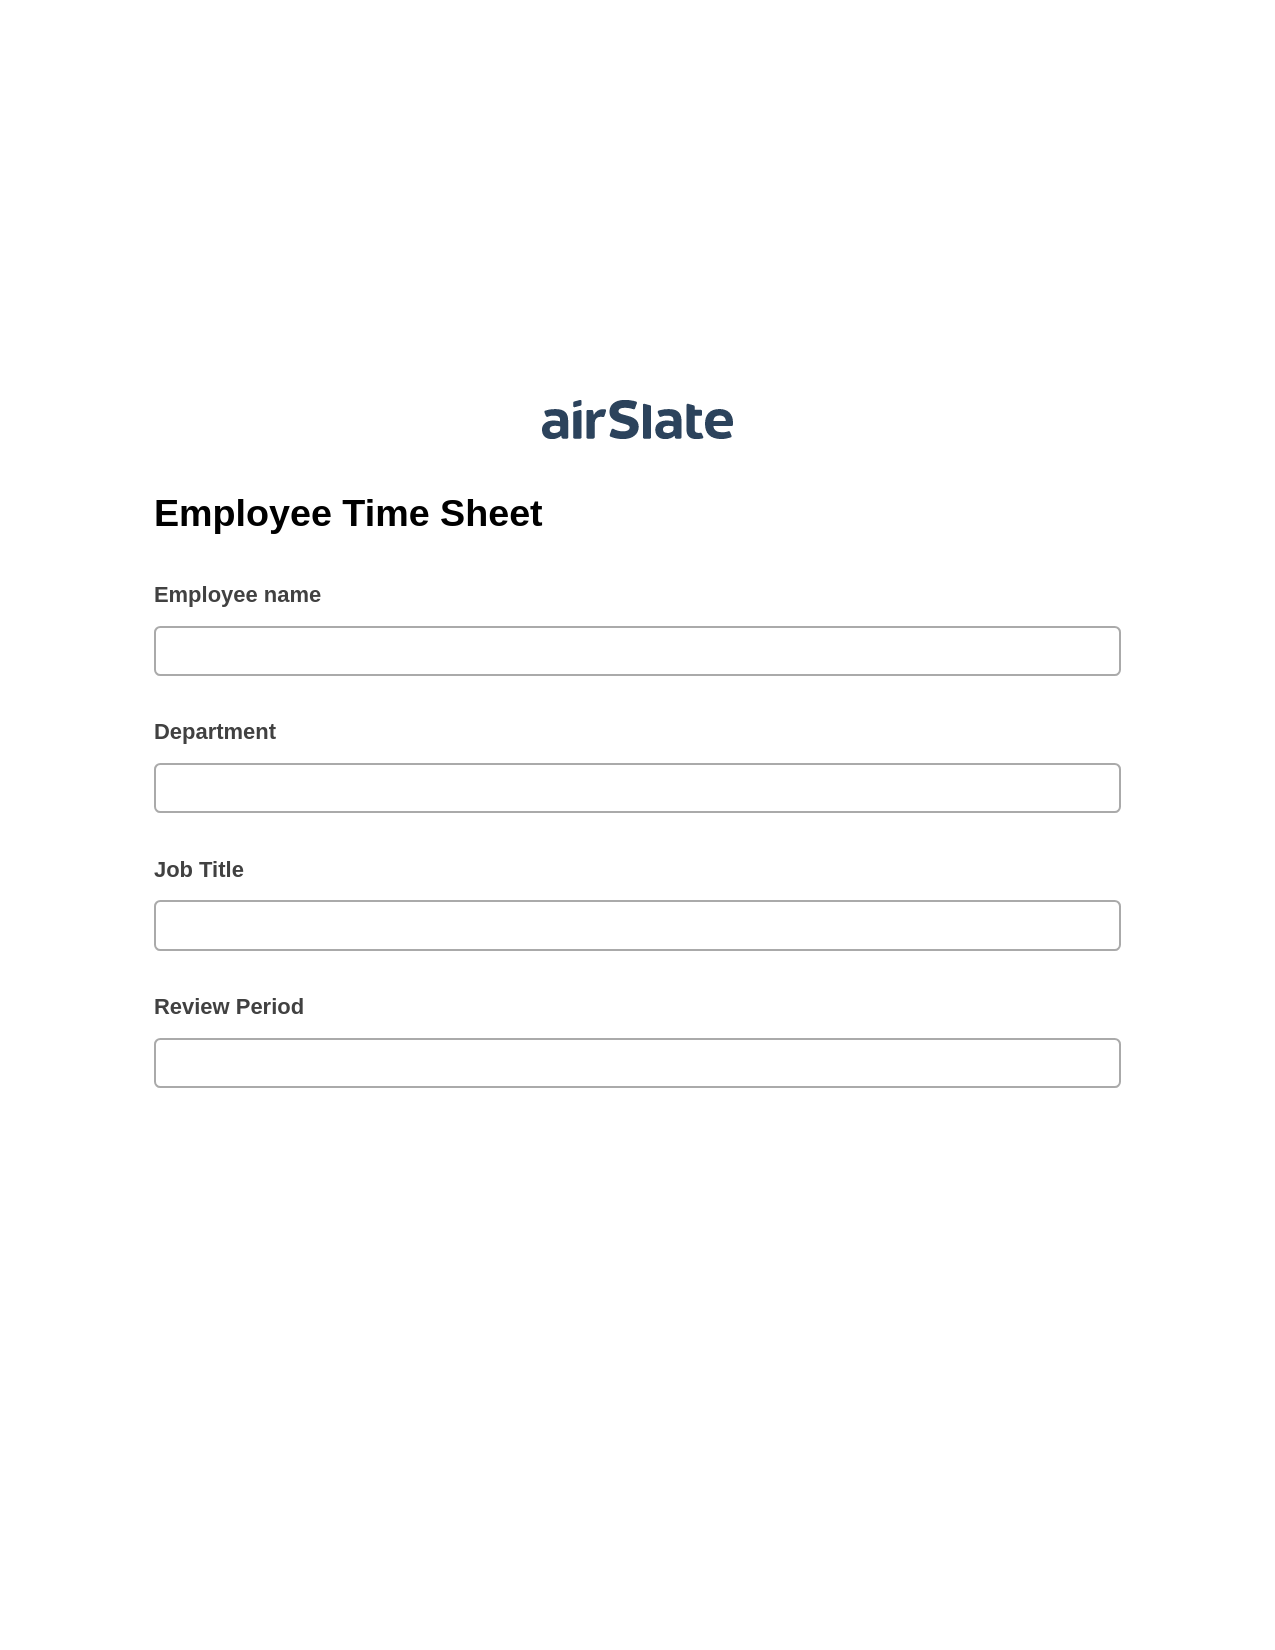 Employee Time Sheet Pre-fill from Excel Spreadsheet Bot, Invoke Salesforce Process Bot, Export to Google Sheet Bot